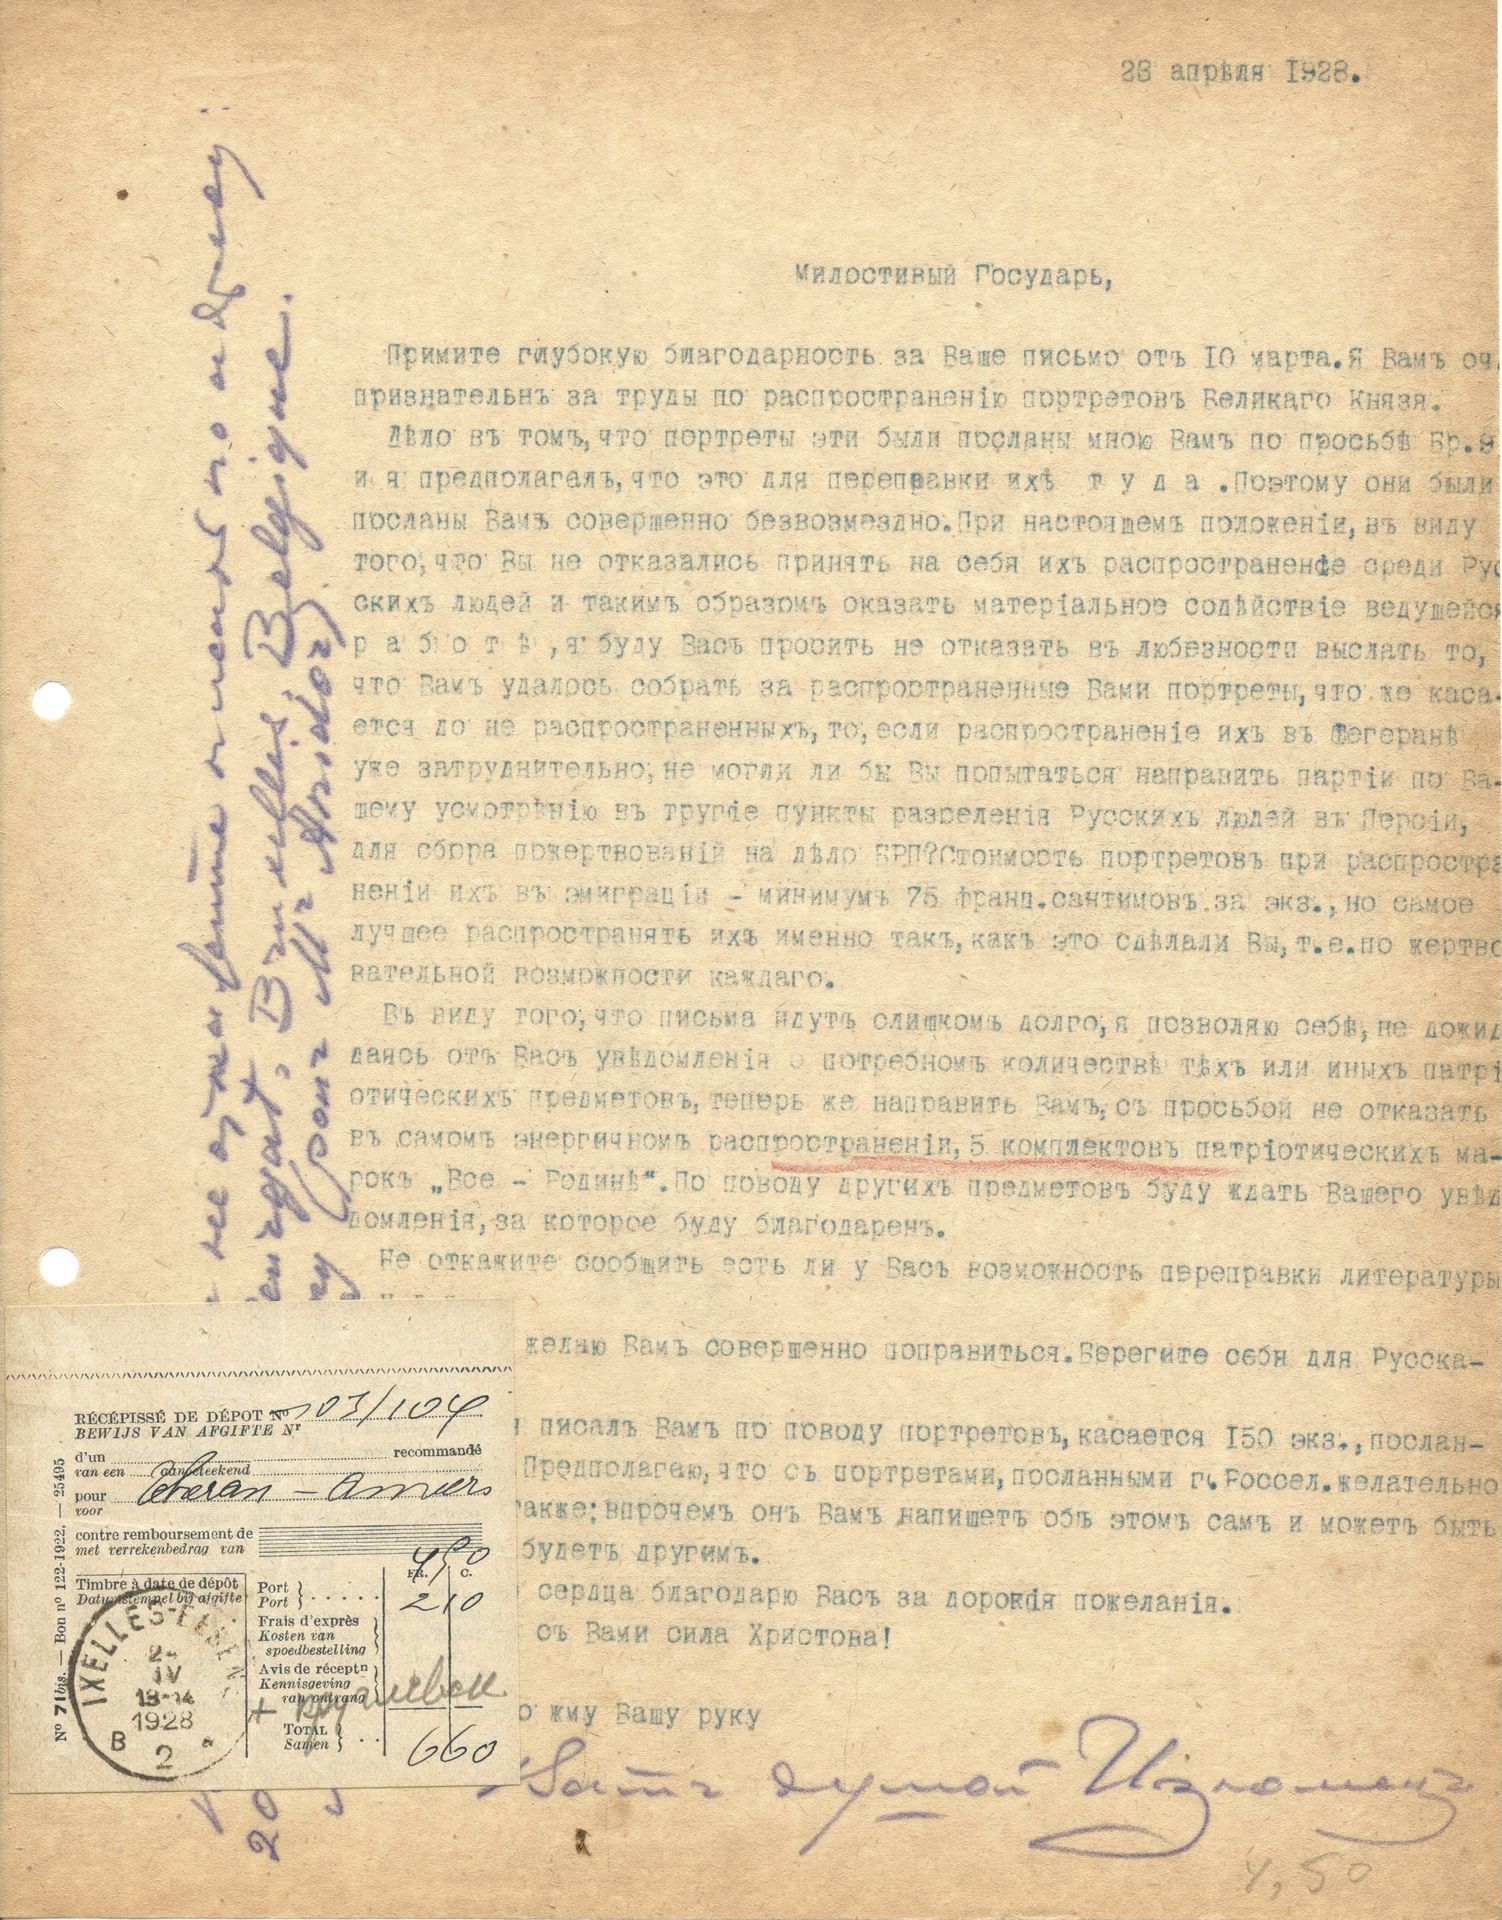 Null ARCHIVIO di Andrej BALASHOV (1899-1969)

- Corrispondenza con N. Sokolov. L&hellip;